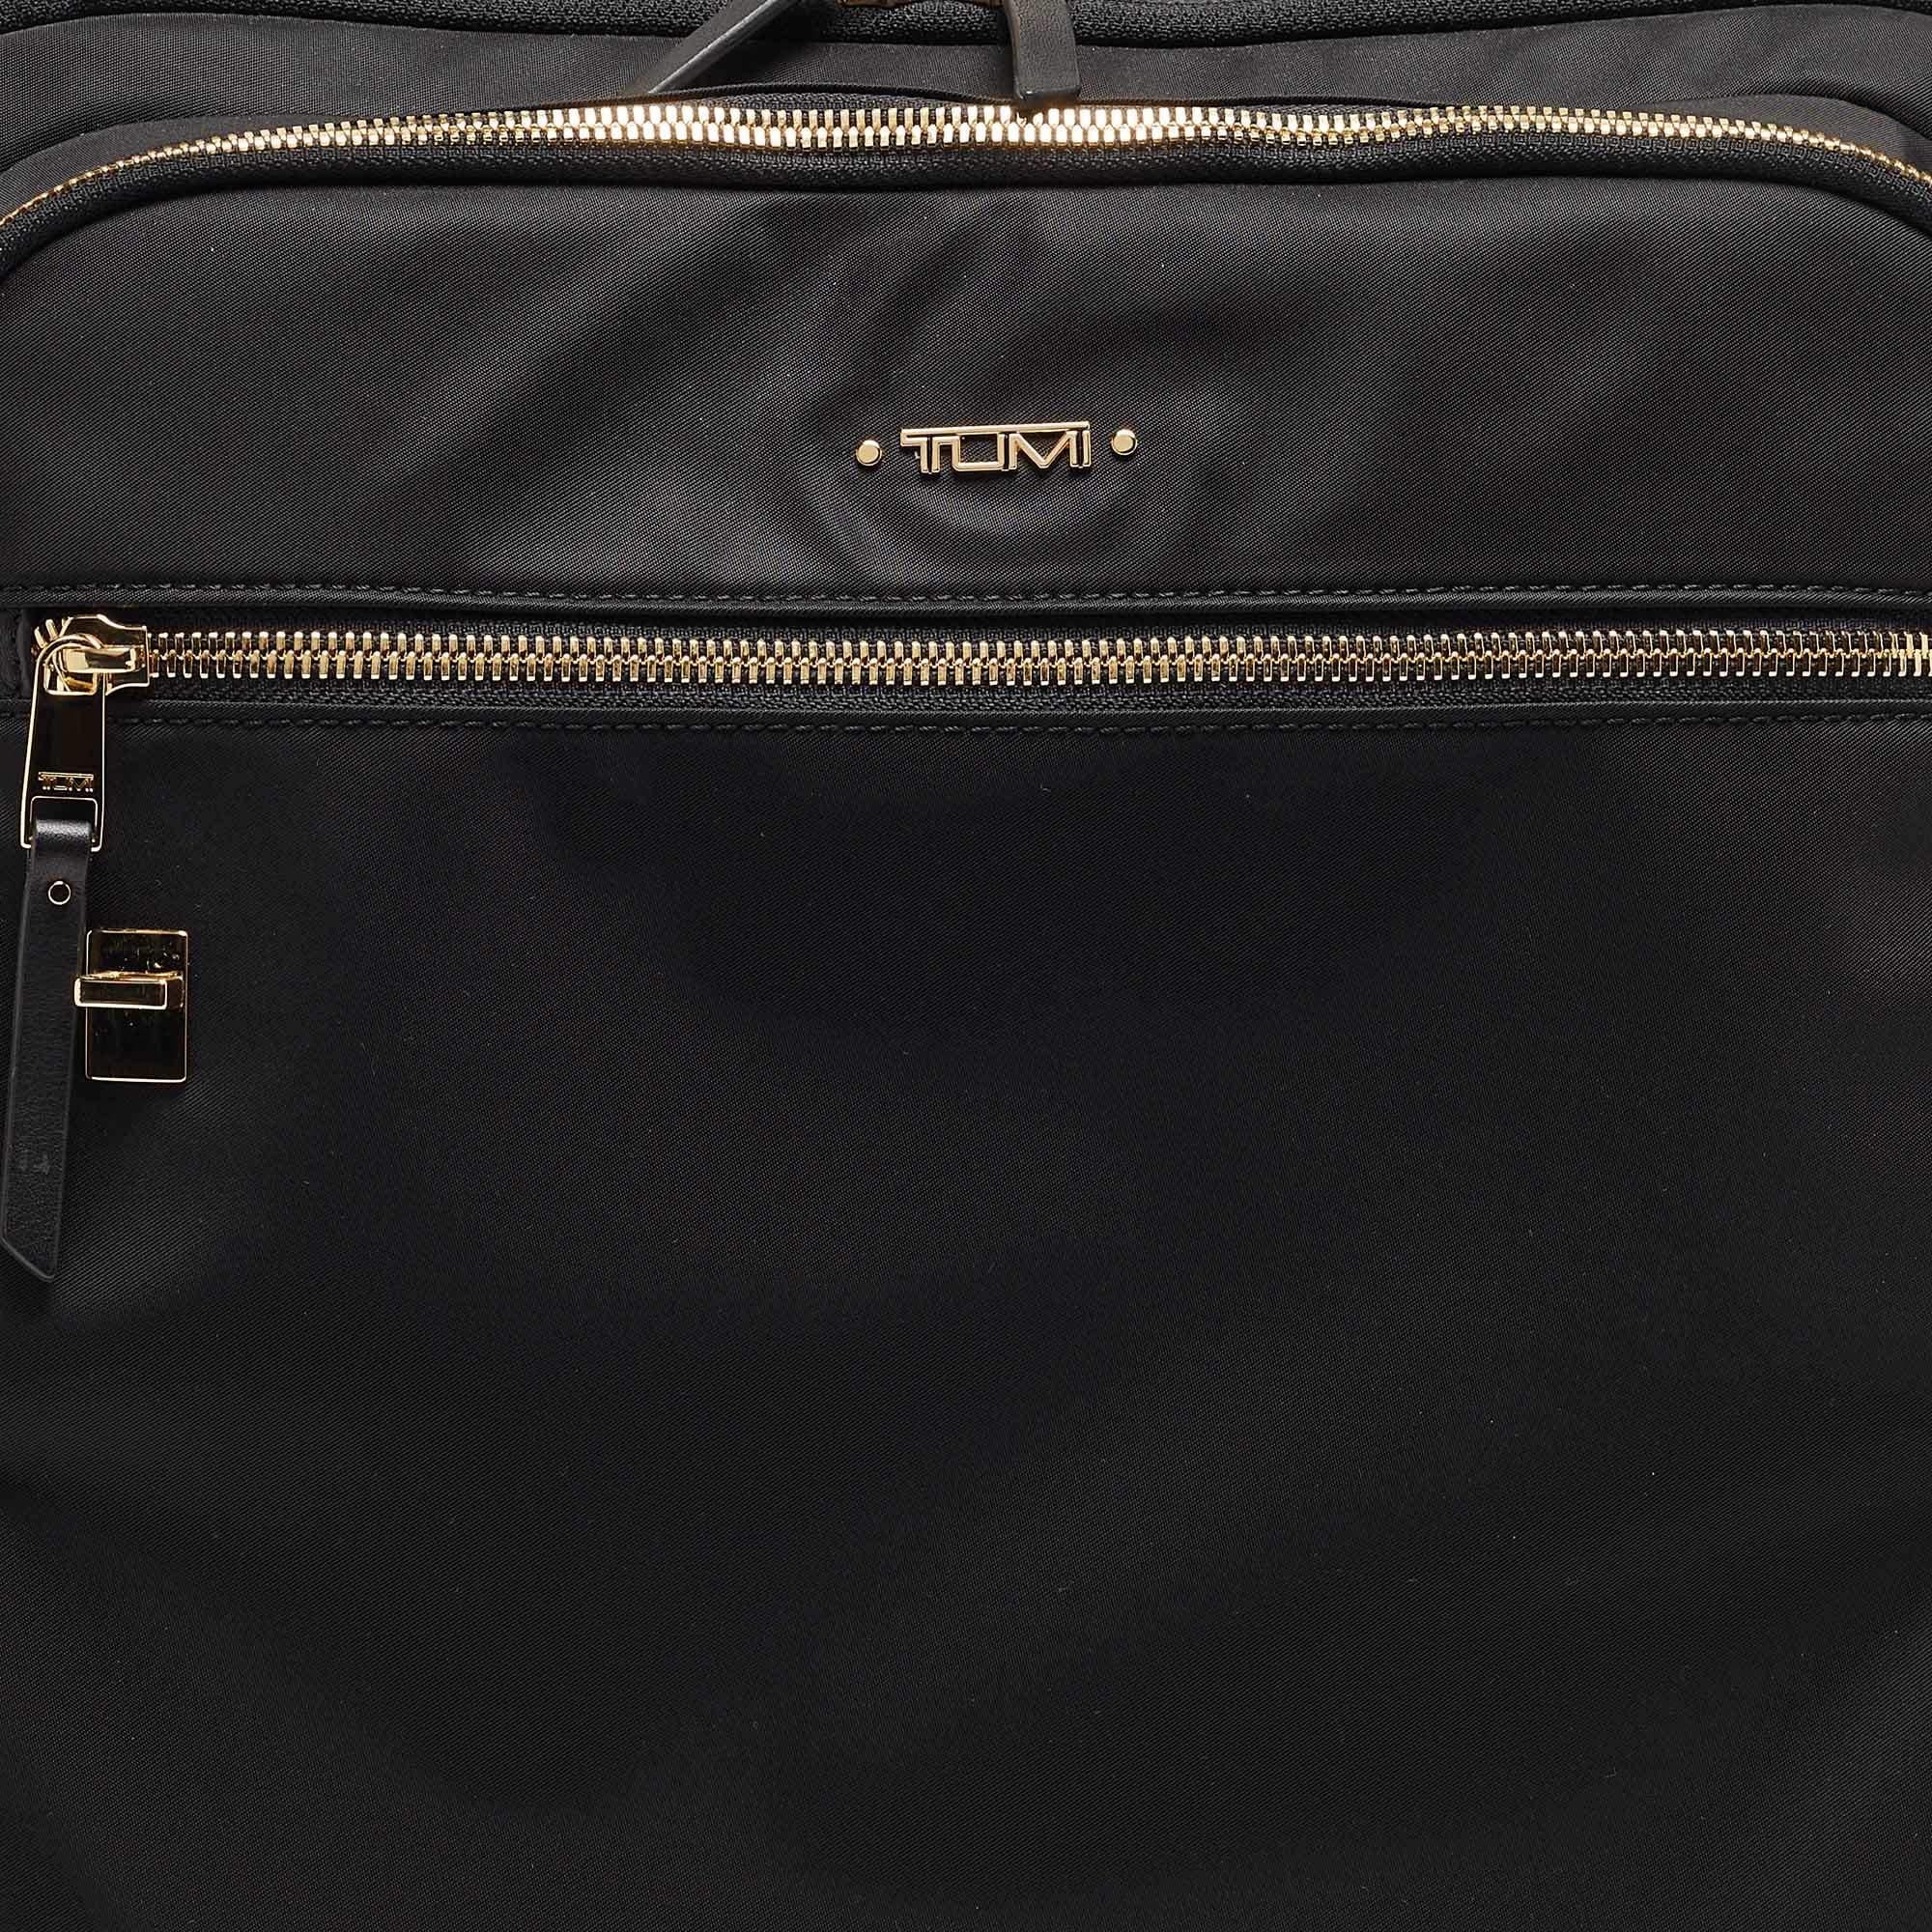 TUMI Black Nylon Compact Oxford Carry On Luggage 4